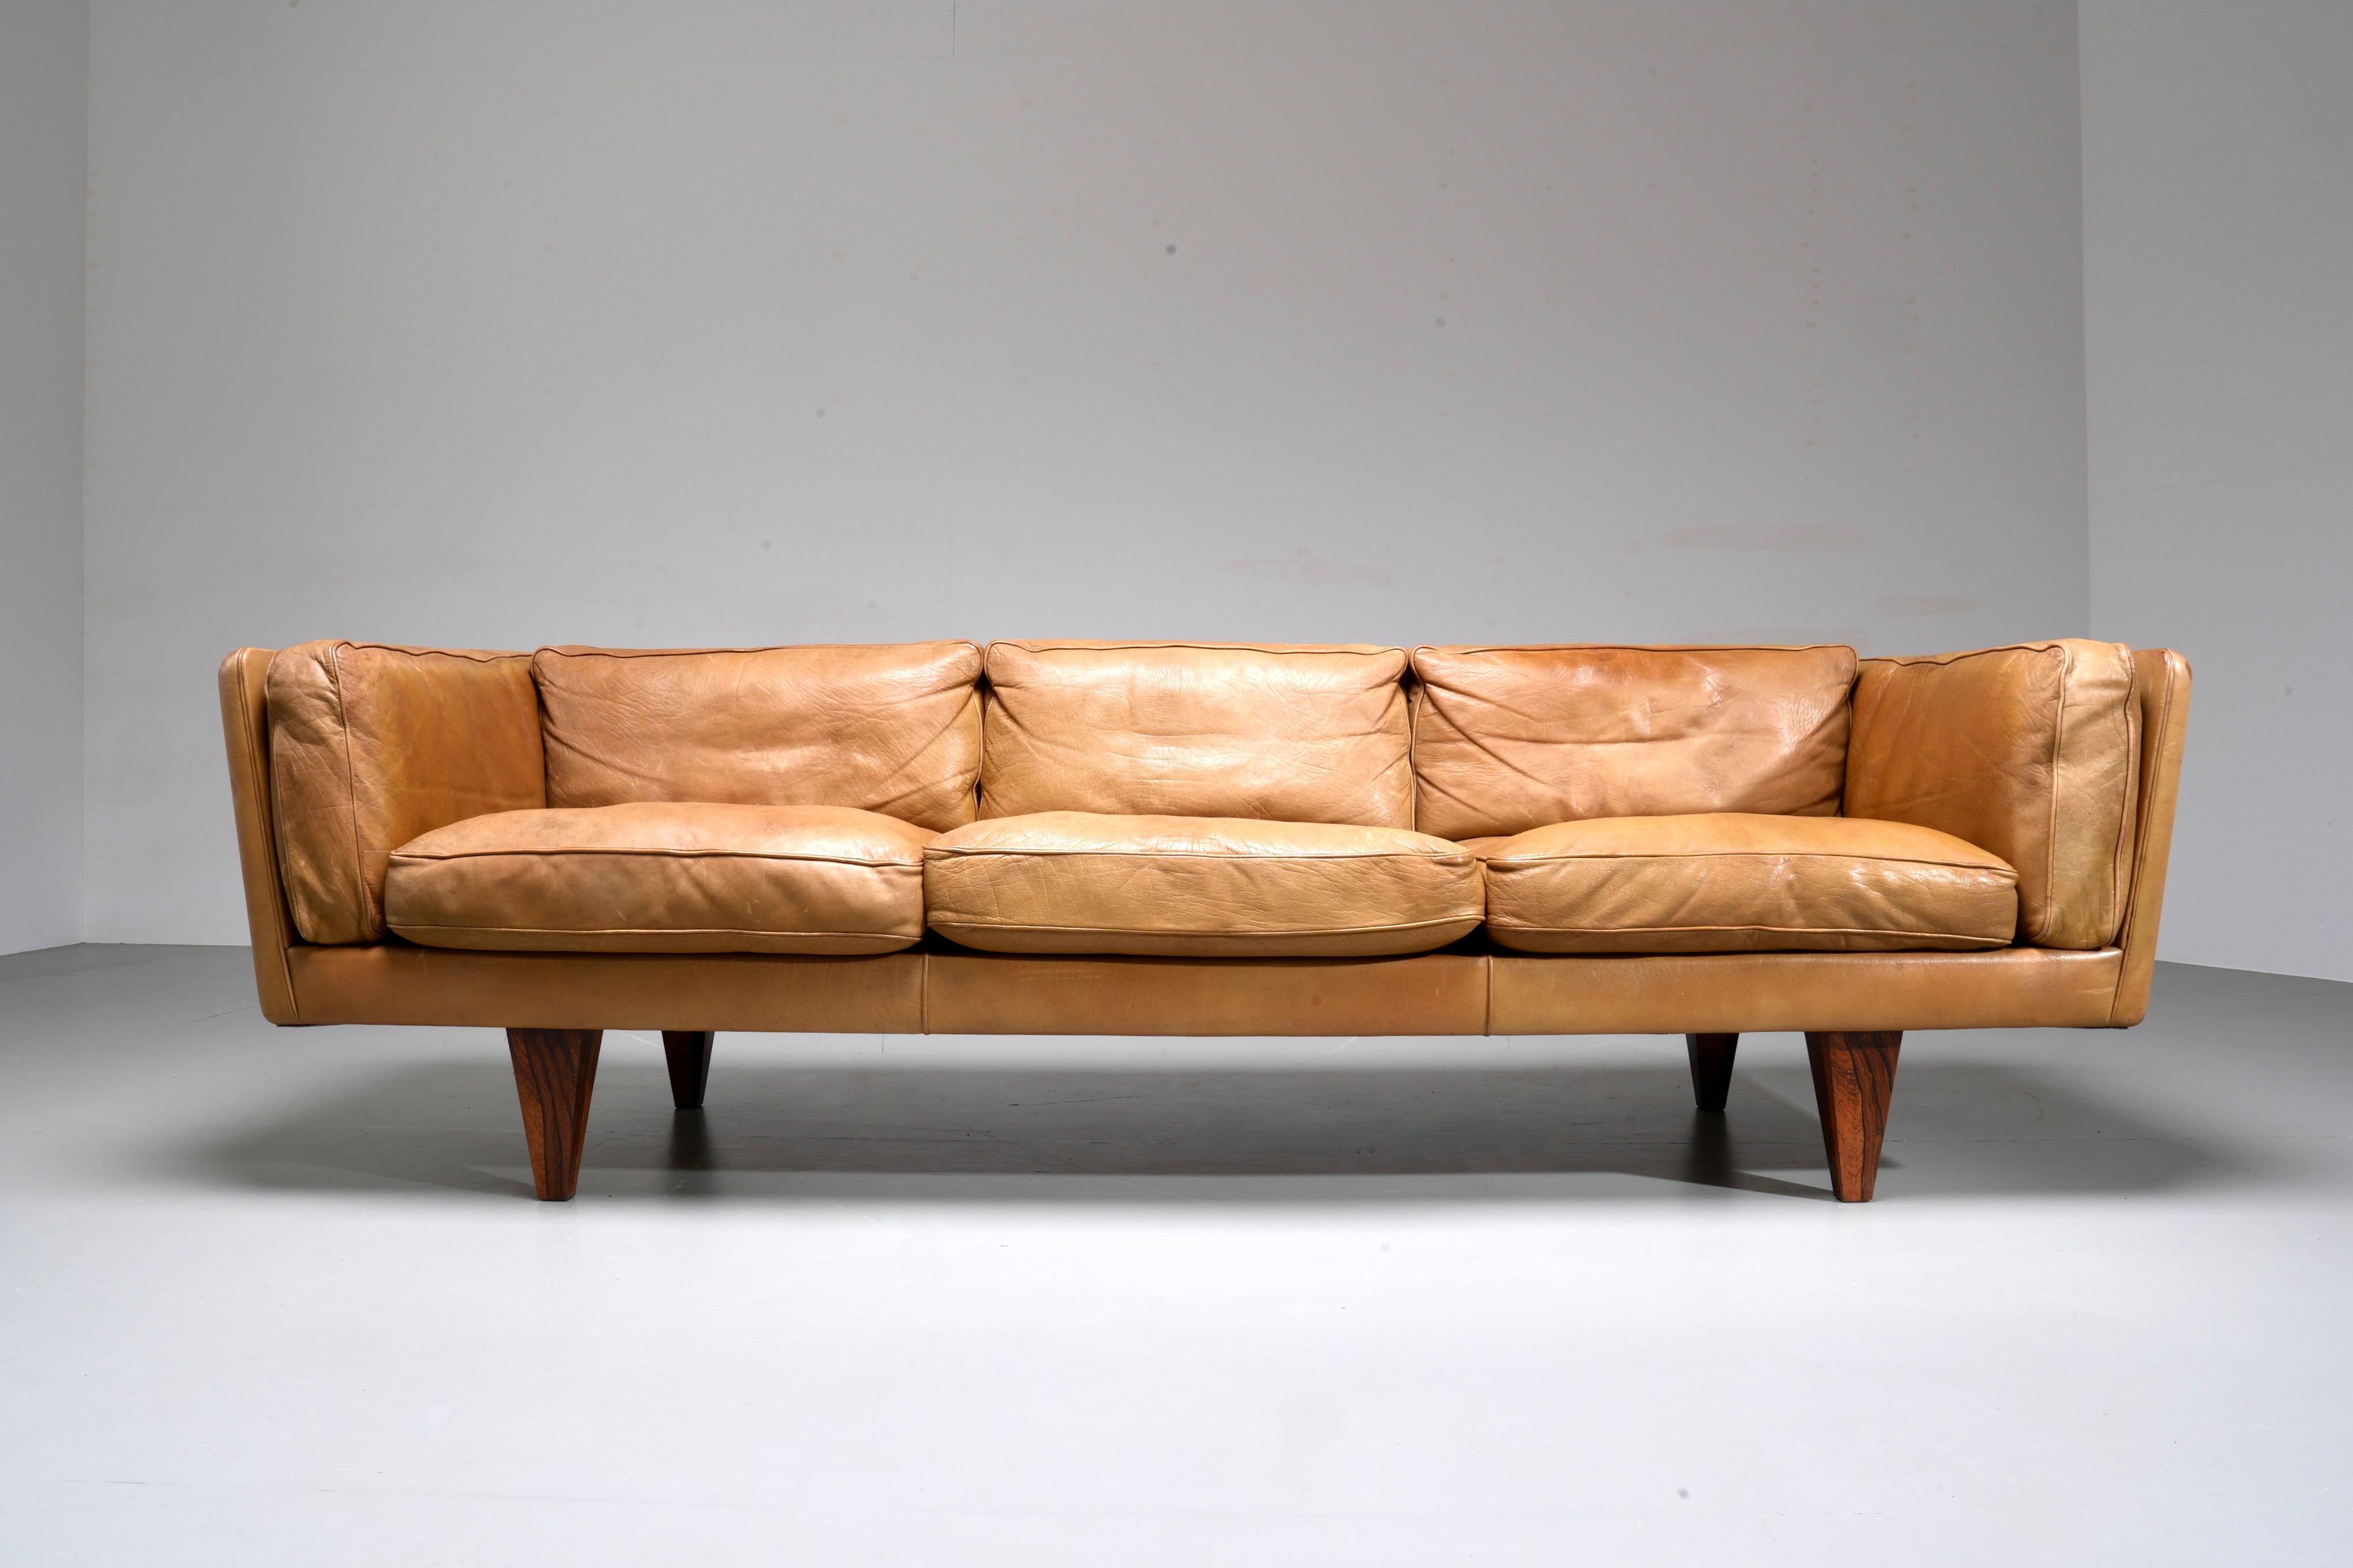 Illum Wikkelsø Dreisitziges Sofa 'V11' aus cognacfarbenem Leder, Dänemark, 1960er Jahre (Moderne der Mitte des Jahrhunderts) im Angebot